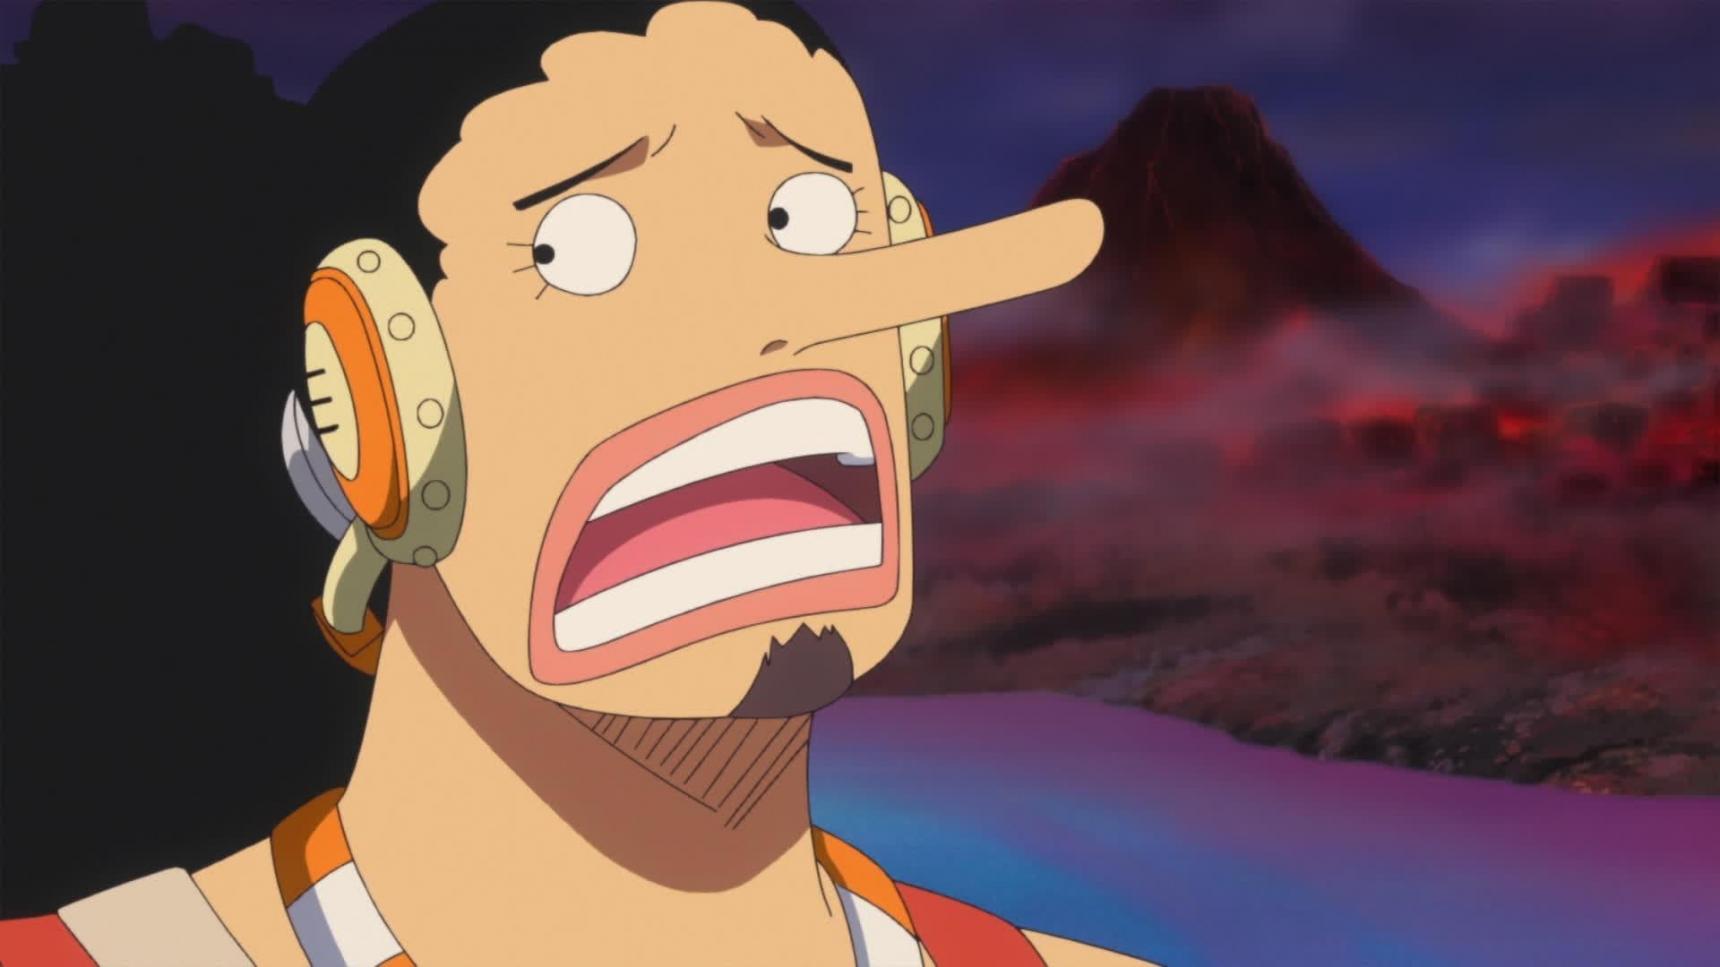 Poster del episodio 583 de One Piece online